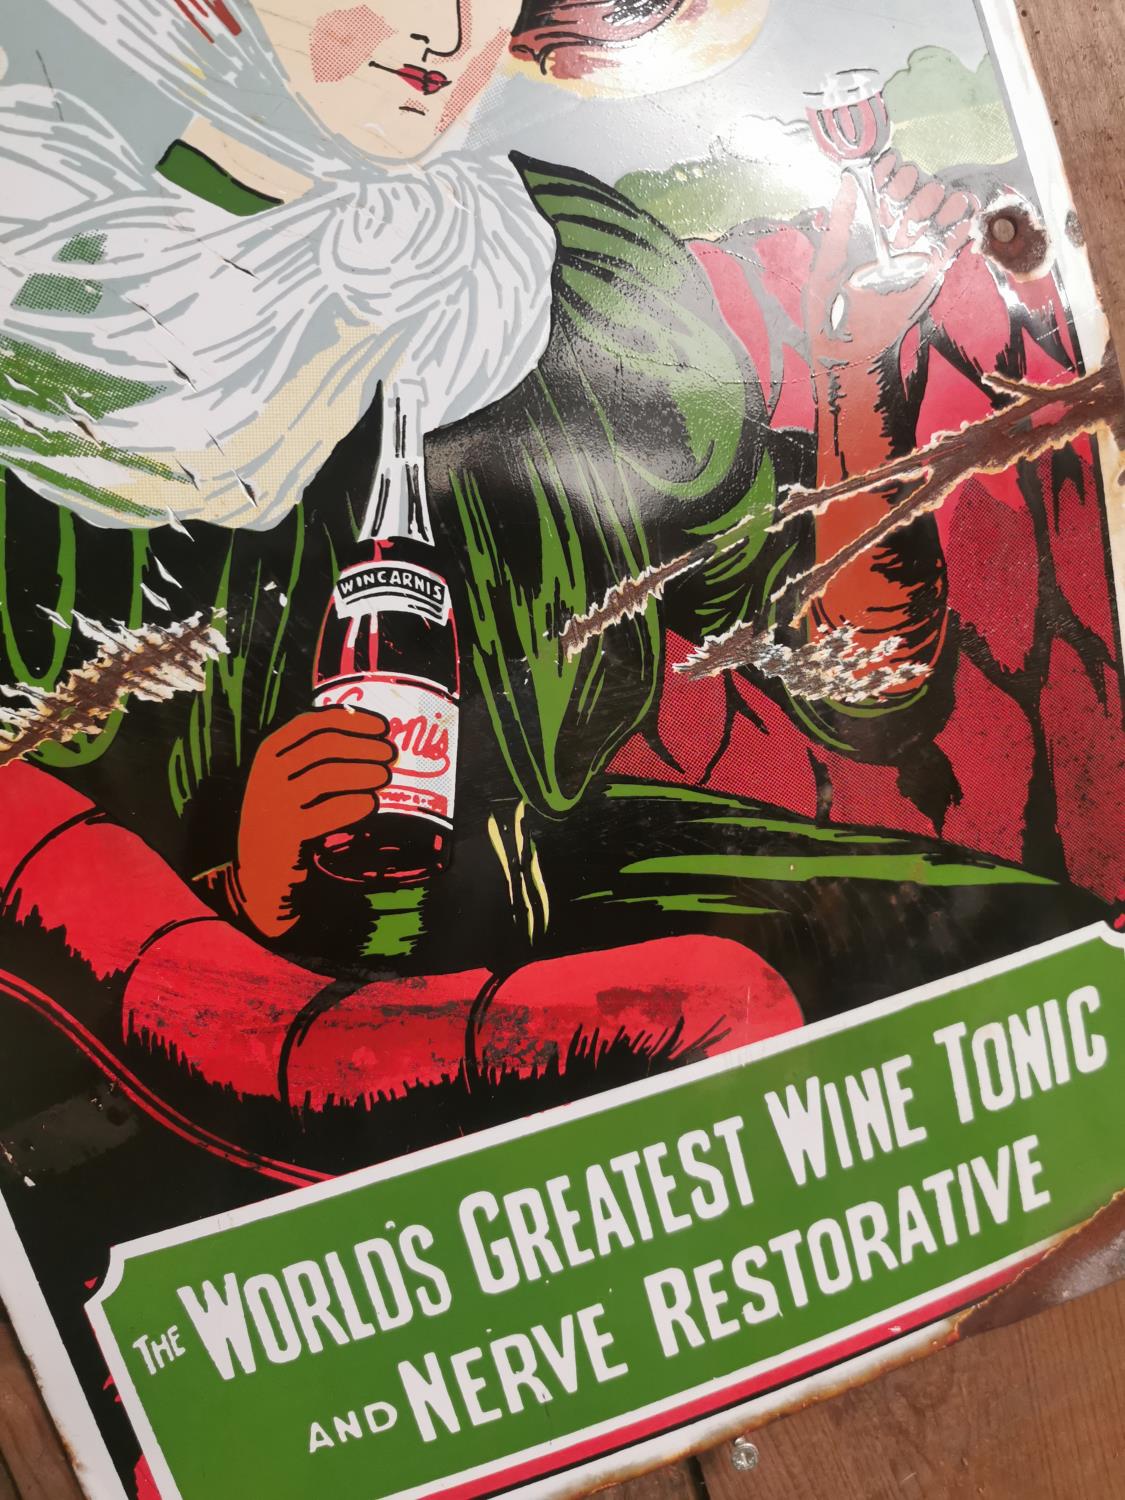 Wincarnis Tonic Wine advertising sign. - Image 2 of 2